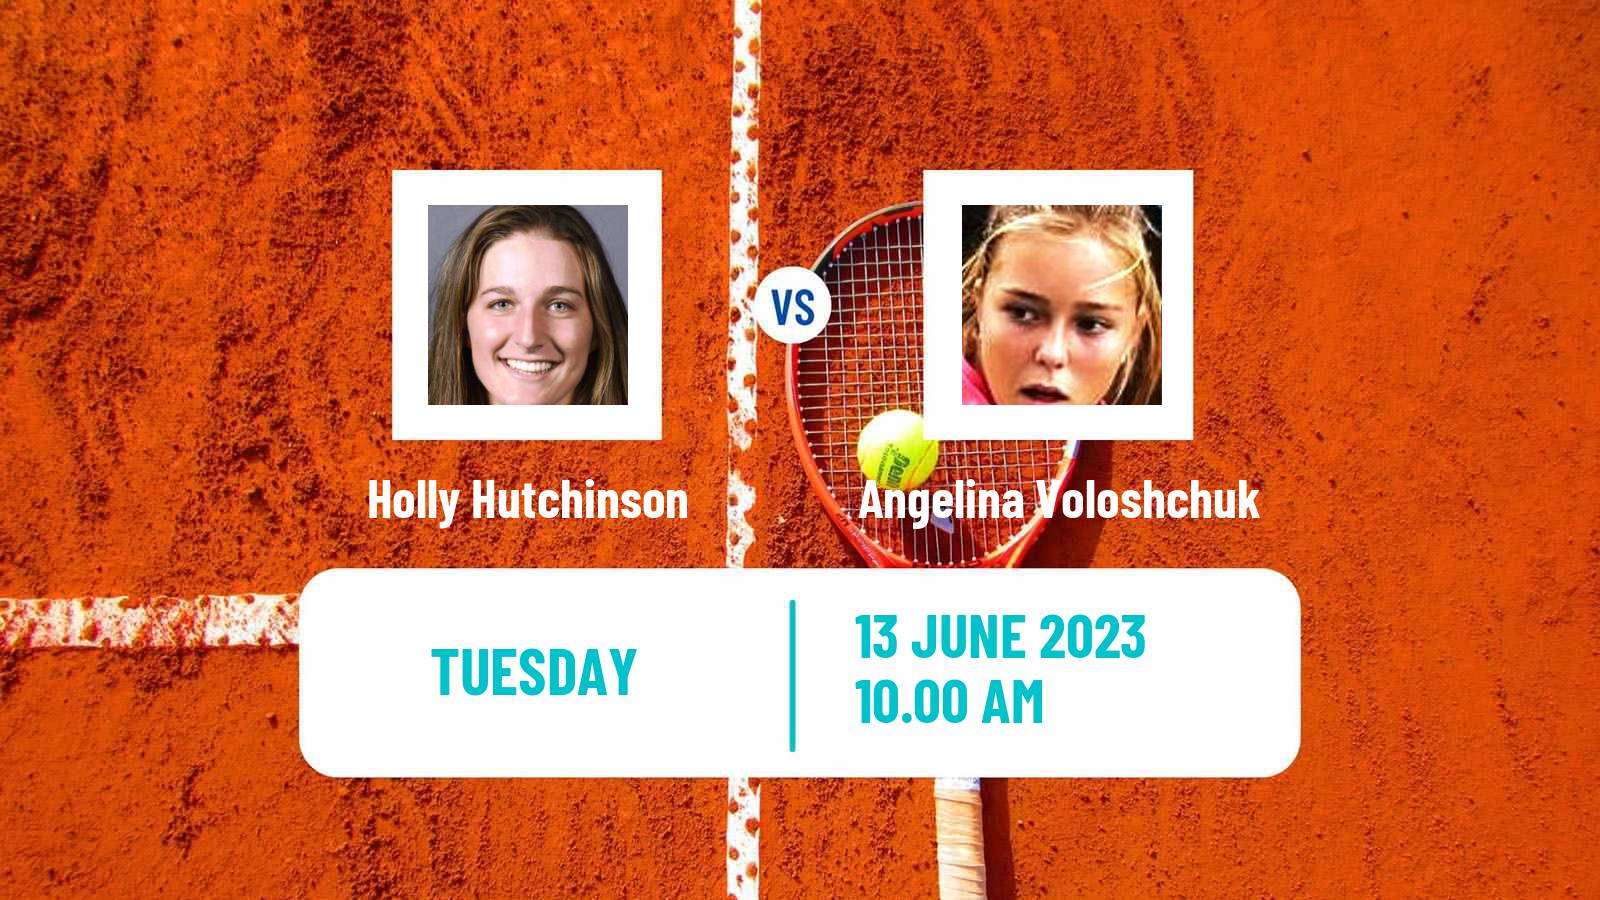 Tennis ITF W25 Guimaraes Women Holly Hutchinson - Angelina Voloshchuk